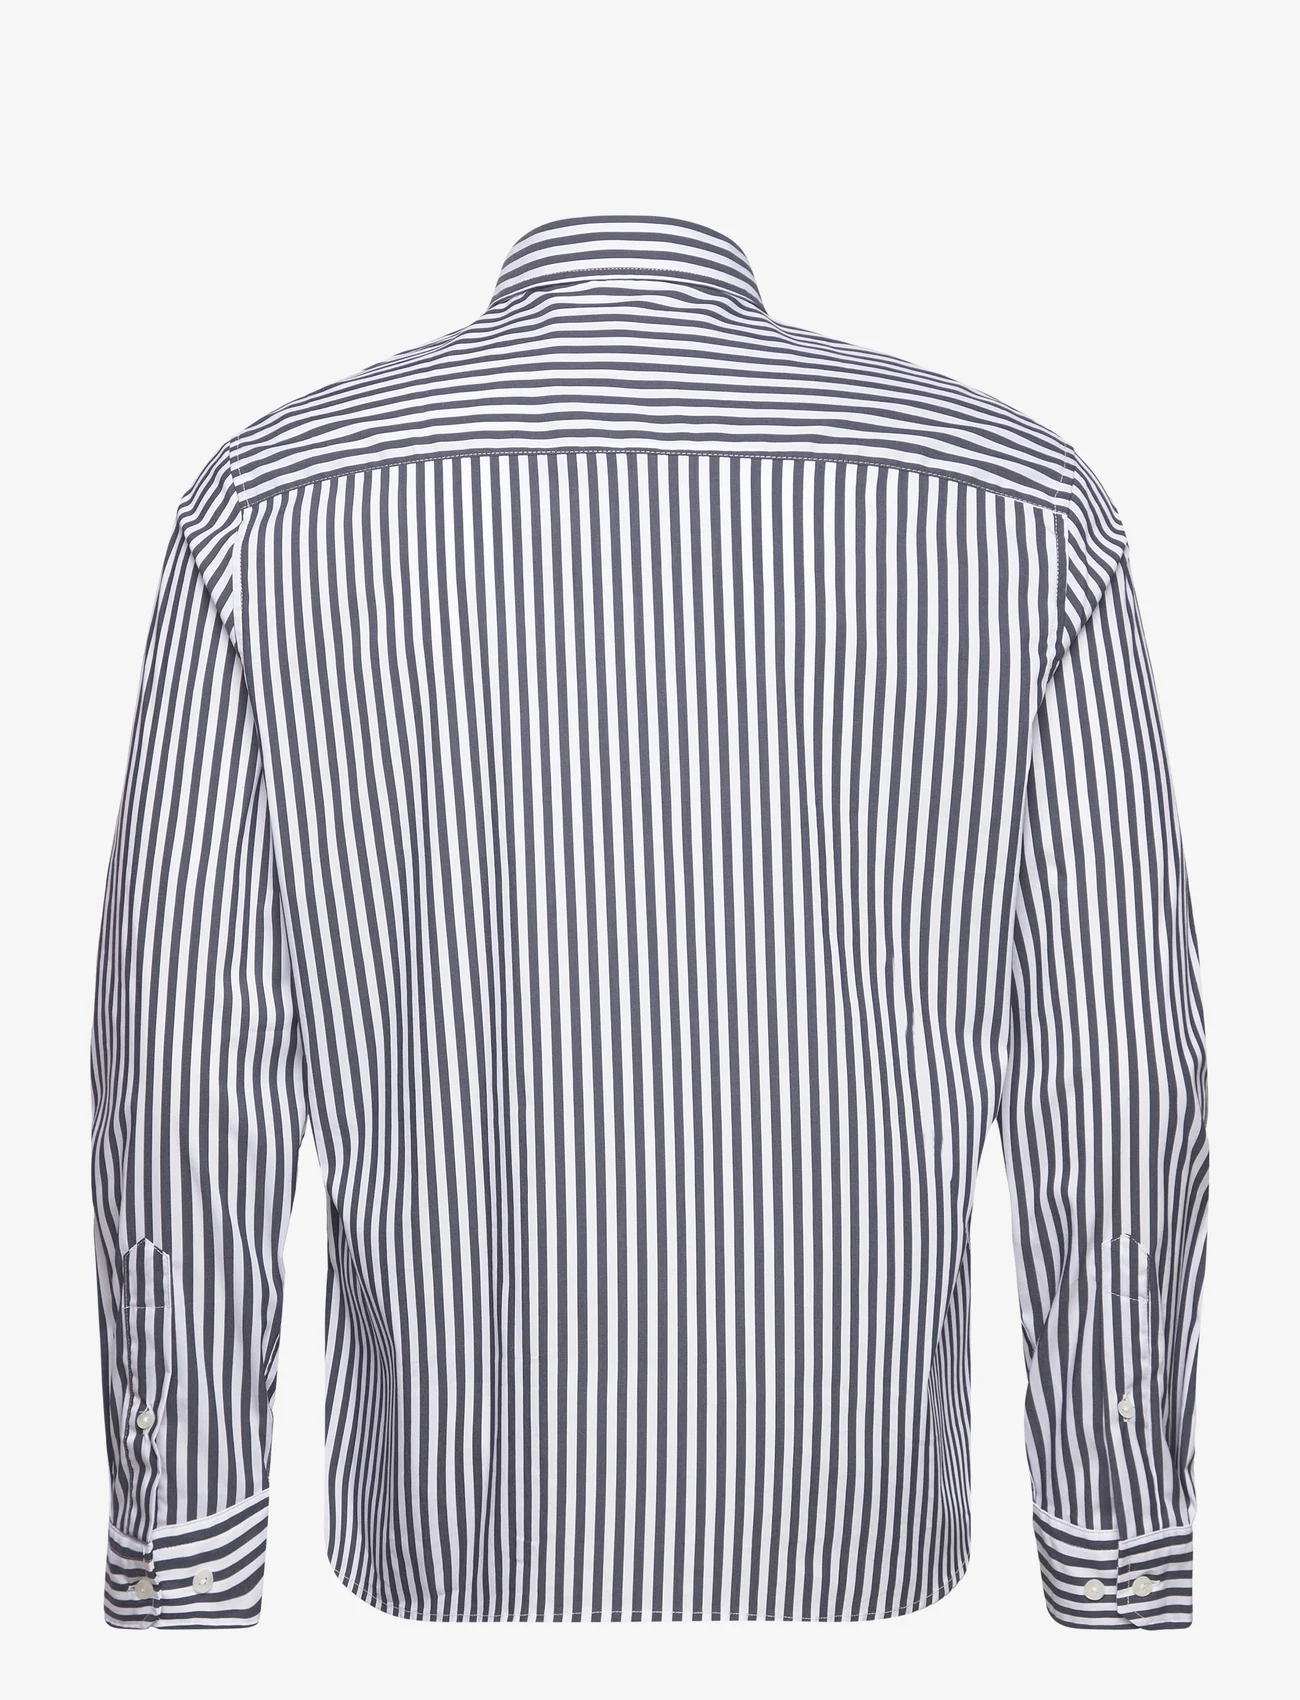 Gabba - York Wert - casual hemden - navy stripe - 1